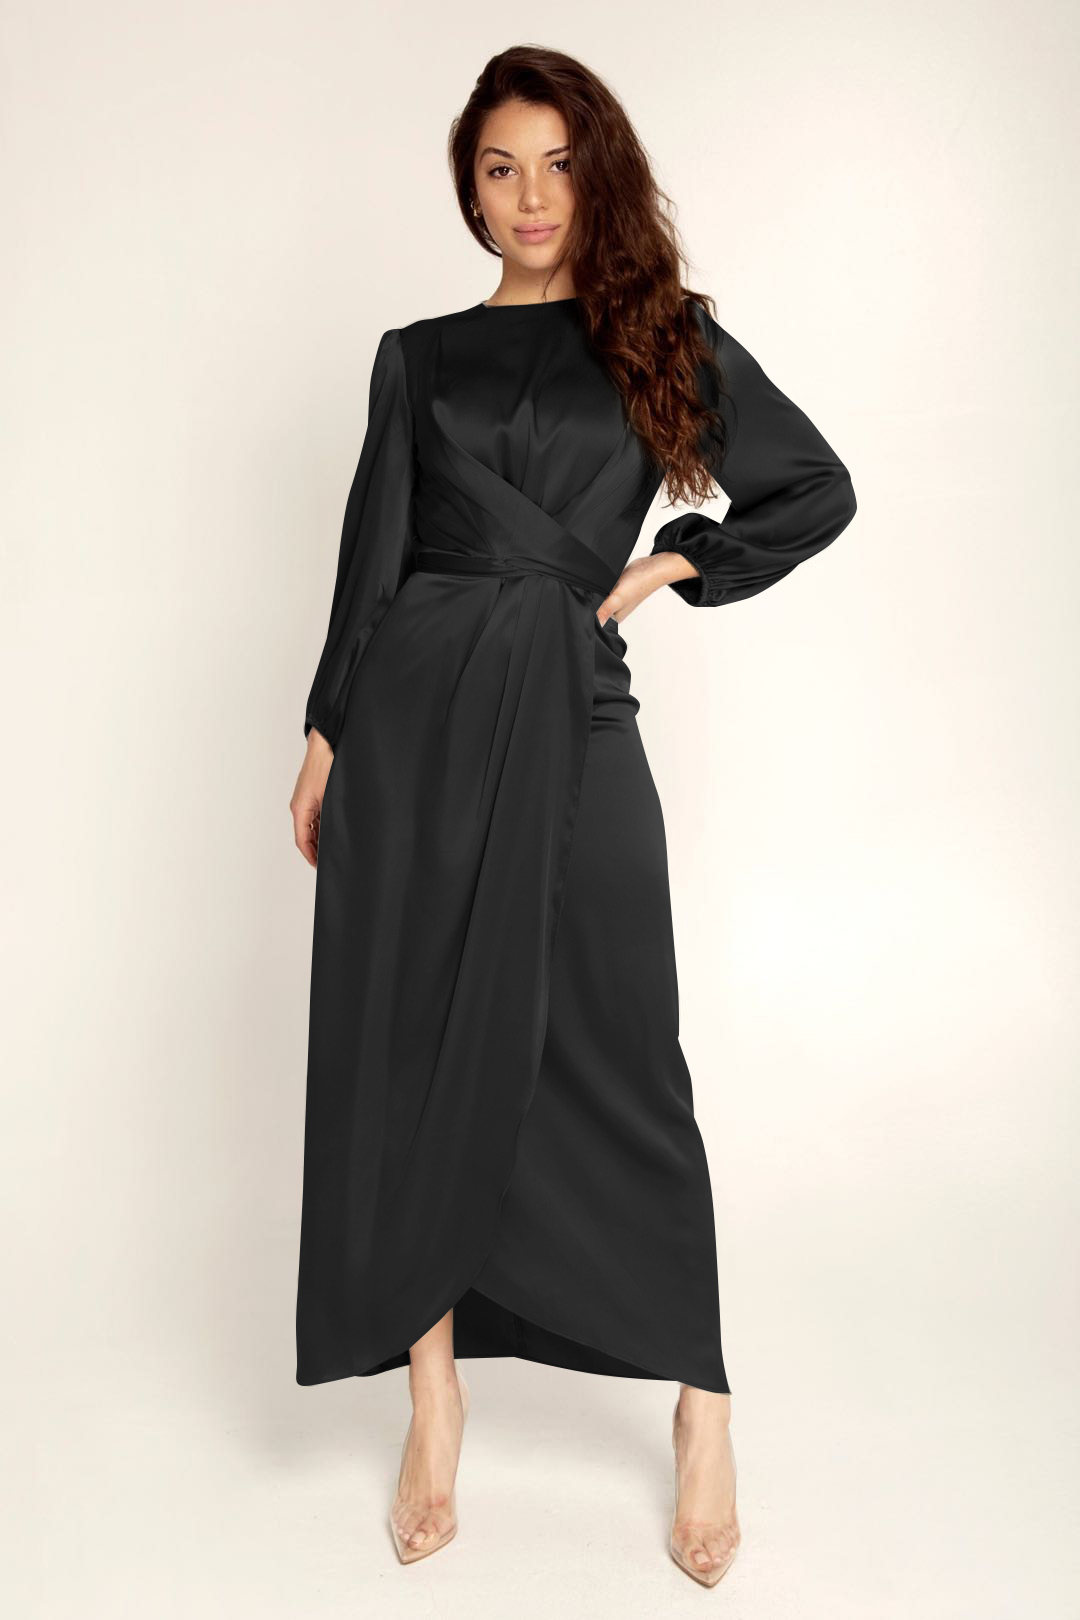 2020 Satin fashion Islamic Clothing Dubai India American Satin Elegant Muslim Maxi dress islamic clothing wholesale